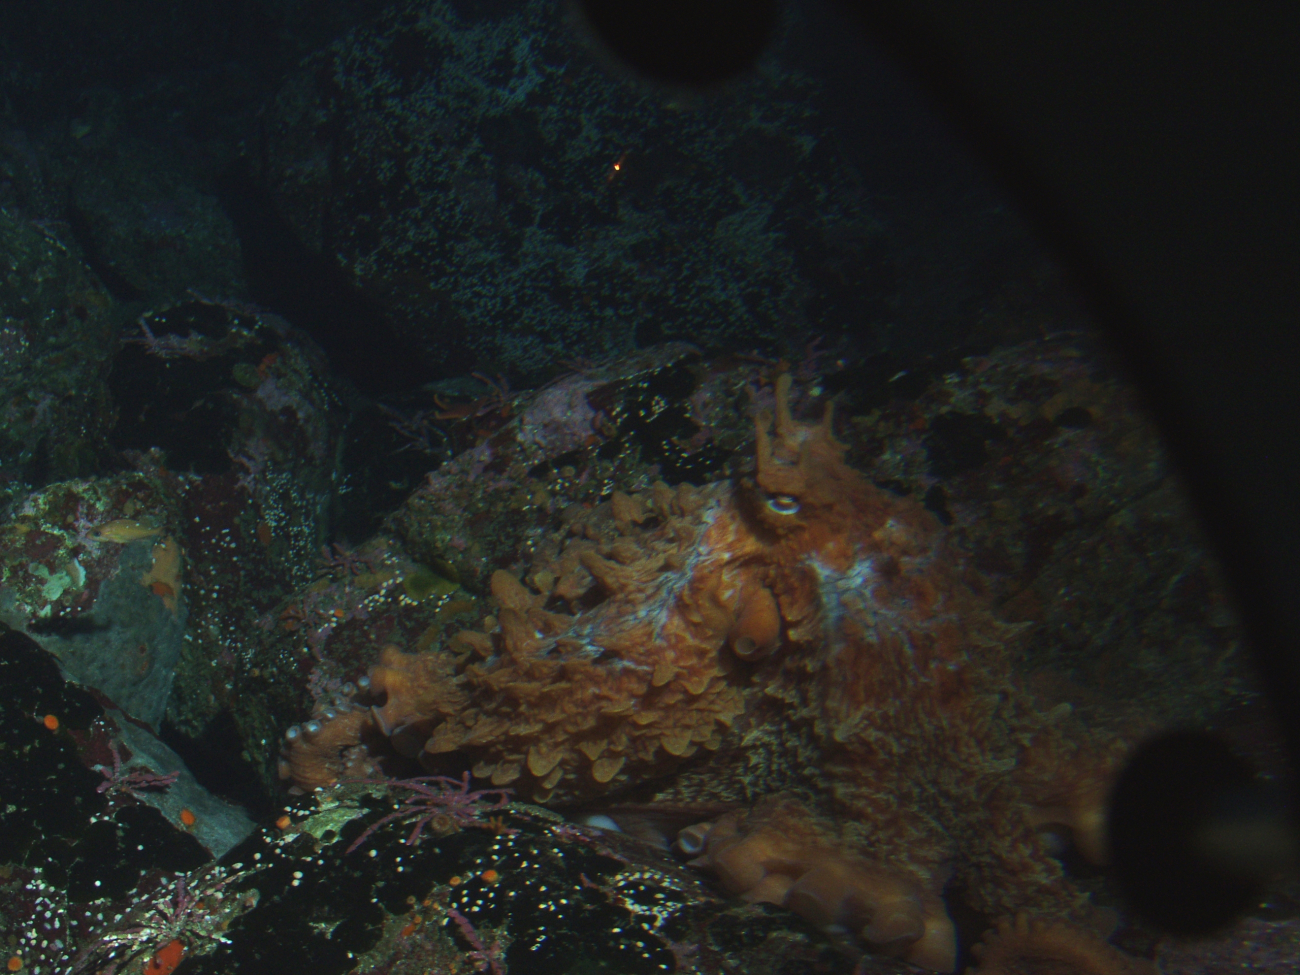 Giant Pacific Octopus (Octopus dofleini) in boulder habitatat 90 meters depth